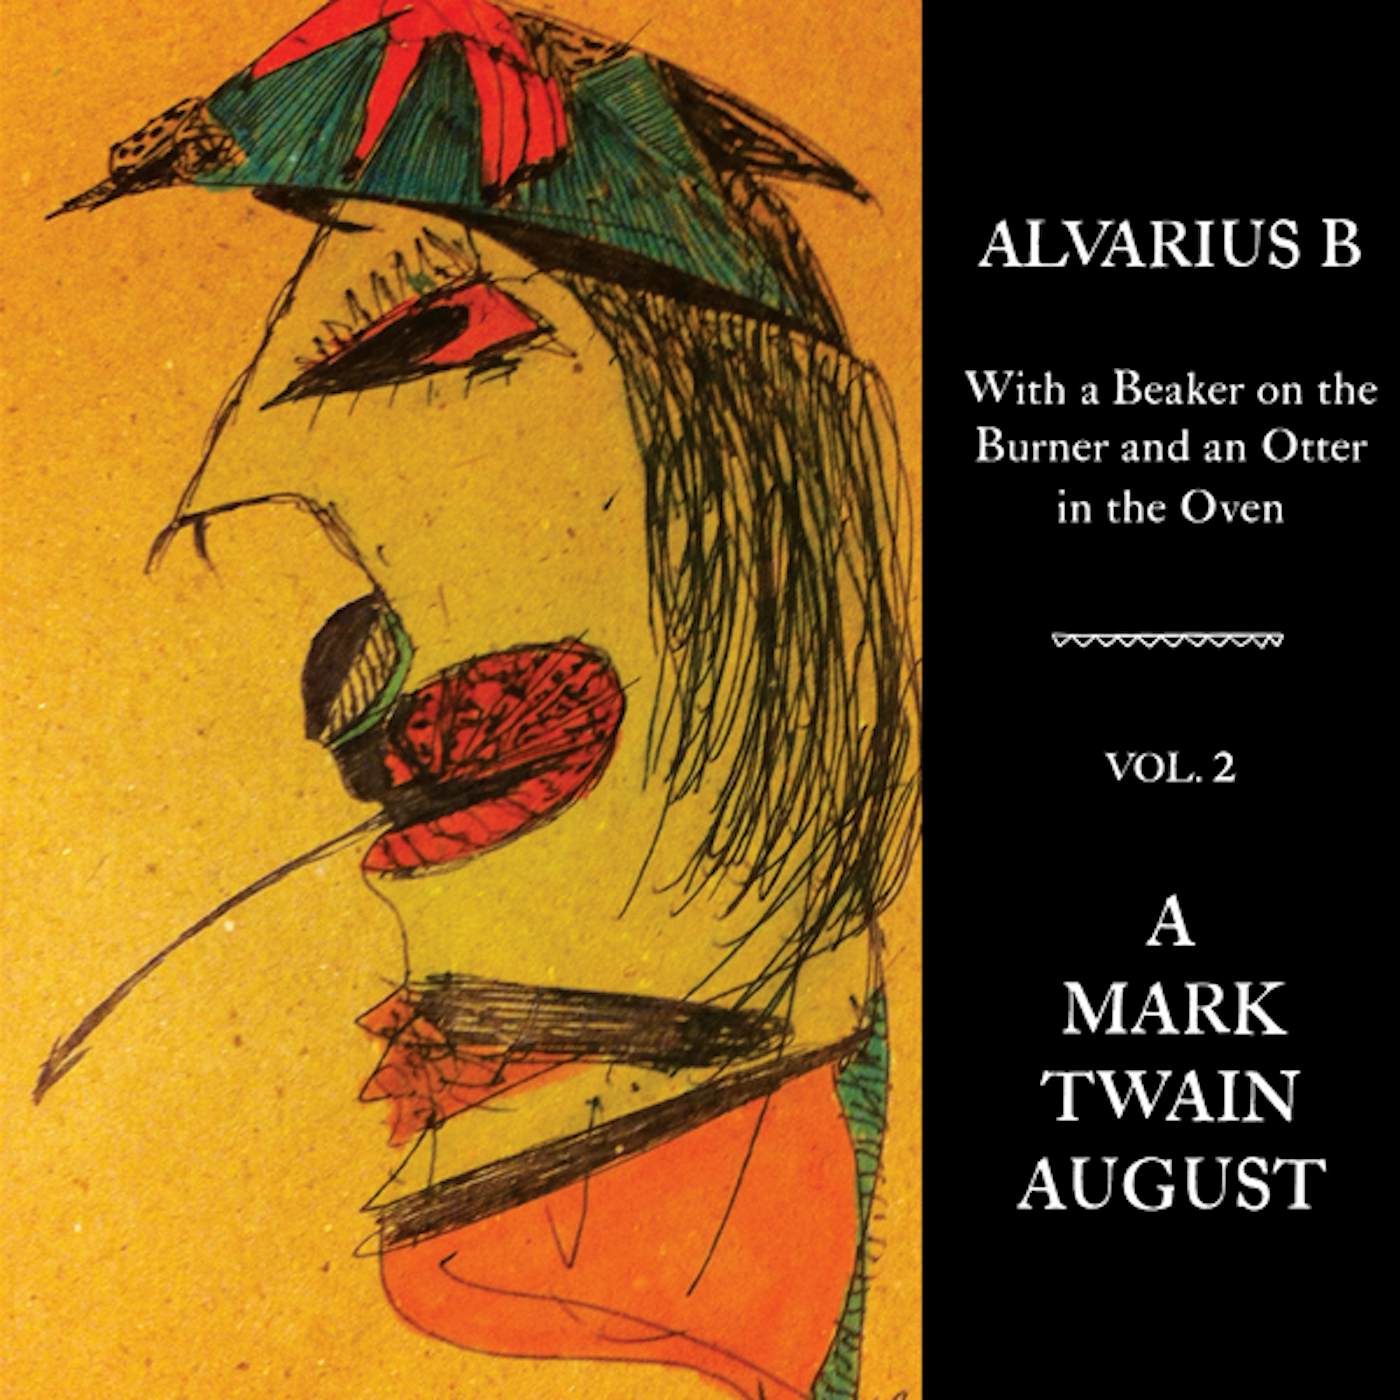 Alvarius B. WITH A BEAKER ON THE BURNER & AN OTTER IN OVEN 2 Vinyl Record